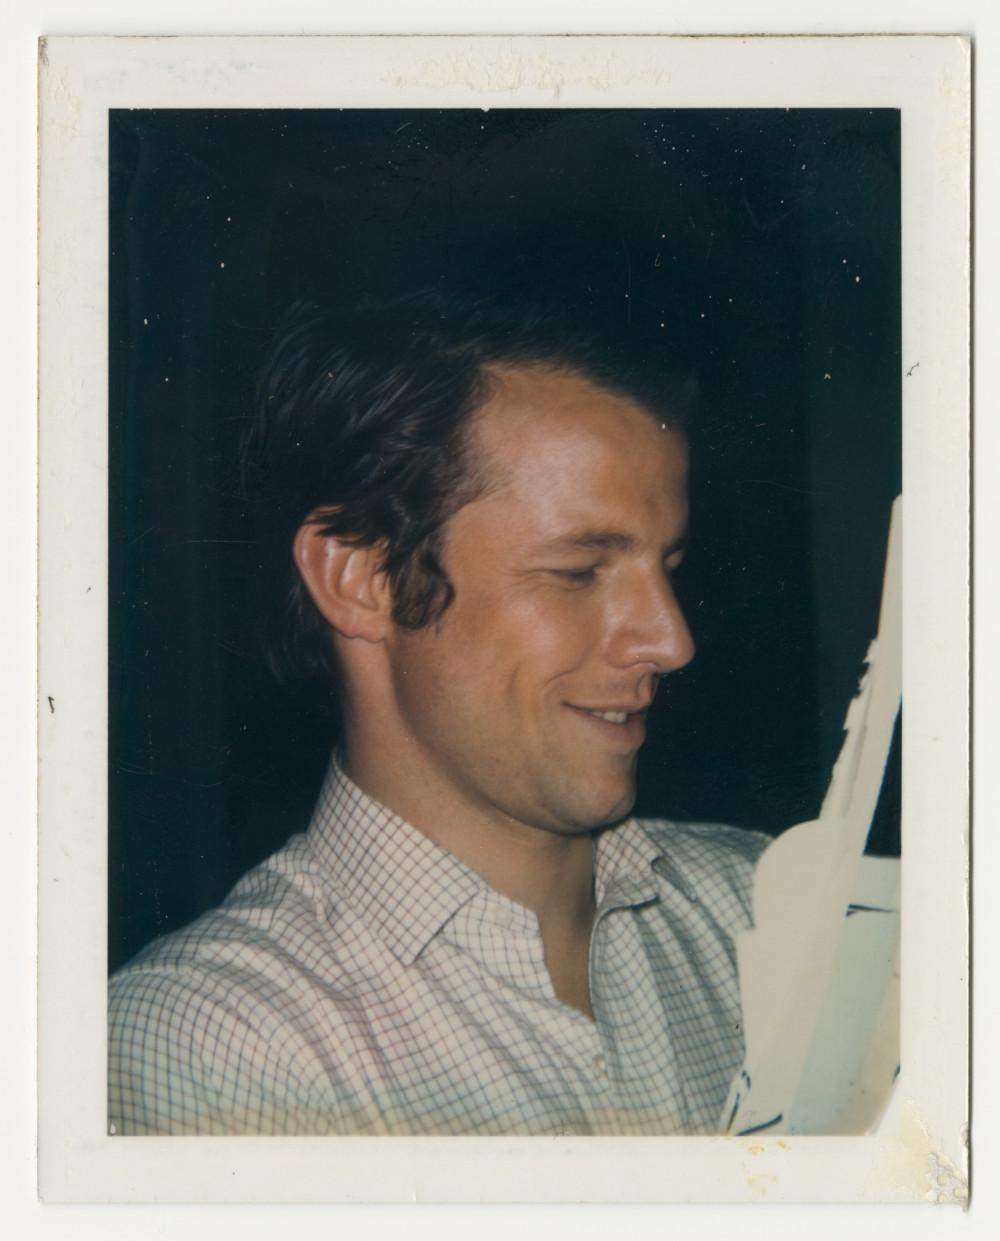 Andy Warhol Portrait Photograph – Peter Beard